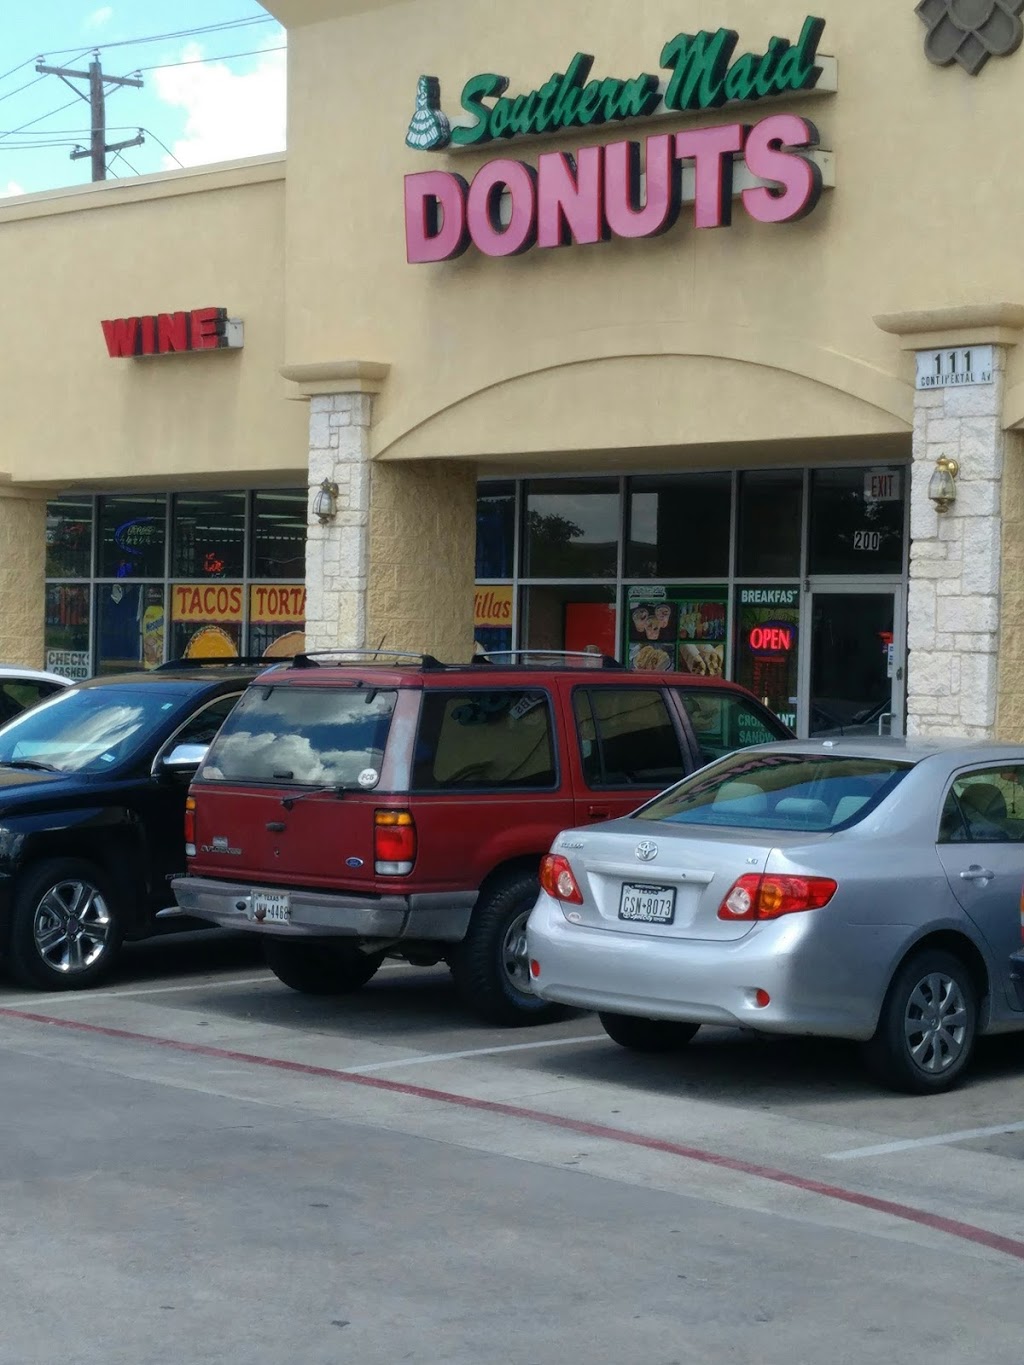 Southern Maid Donuts | 111 Continental Ave, Dallas, TX 75207, USA | Phone: (214) 760-2494